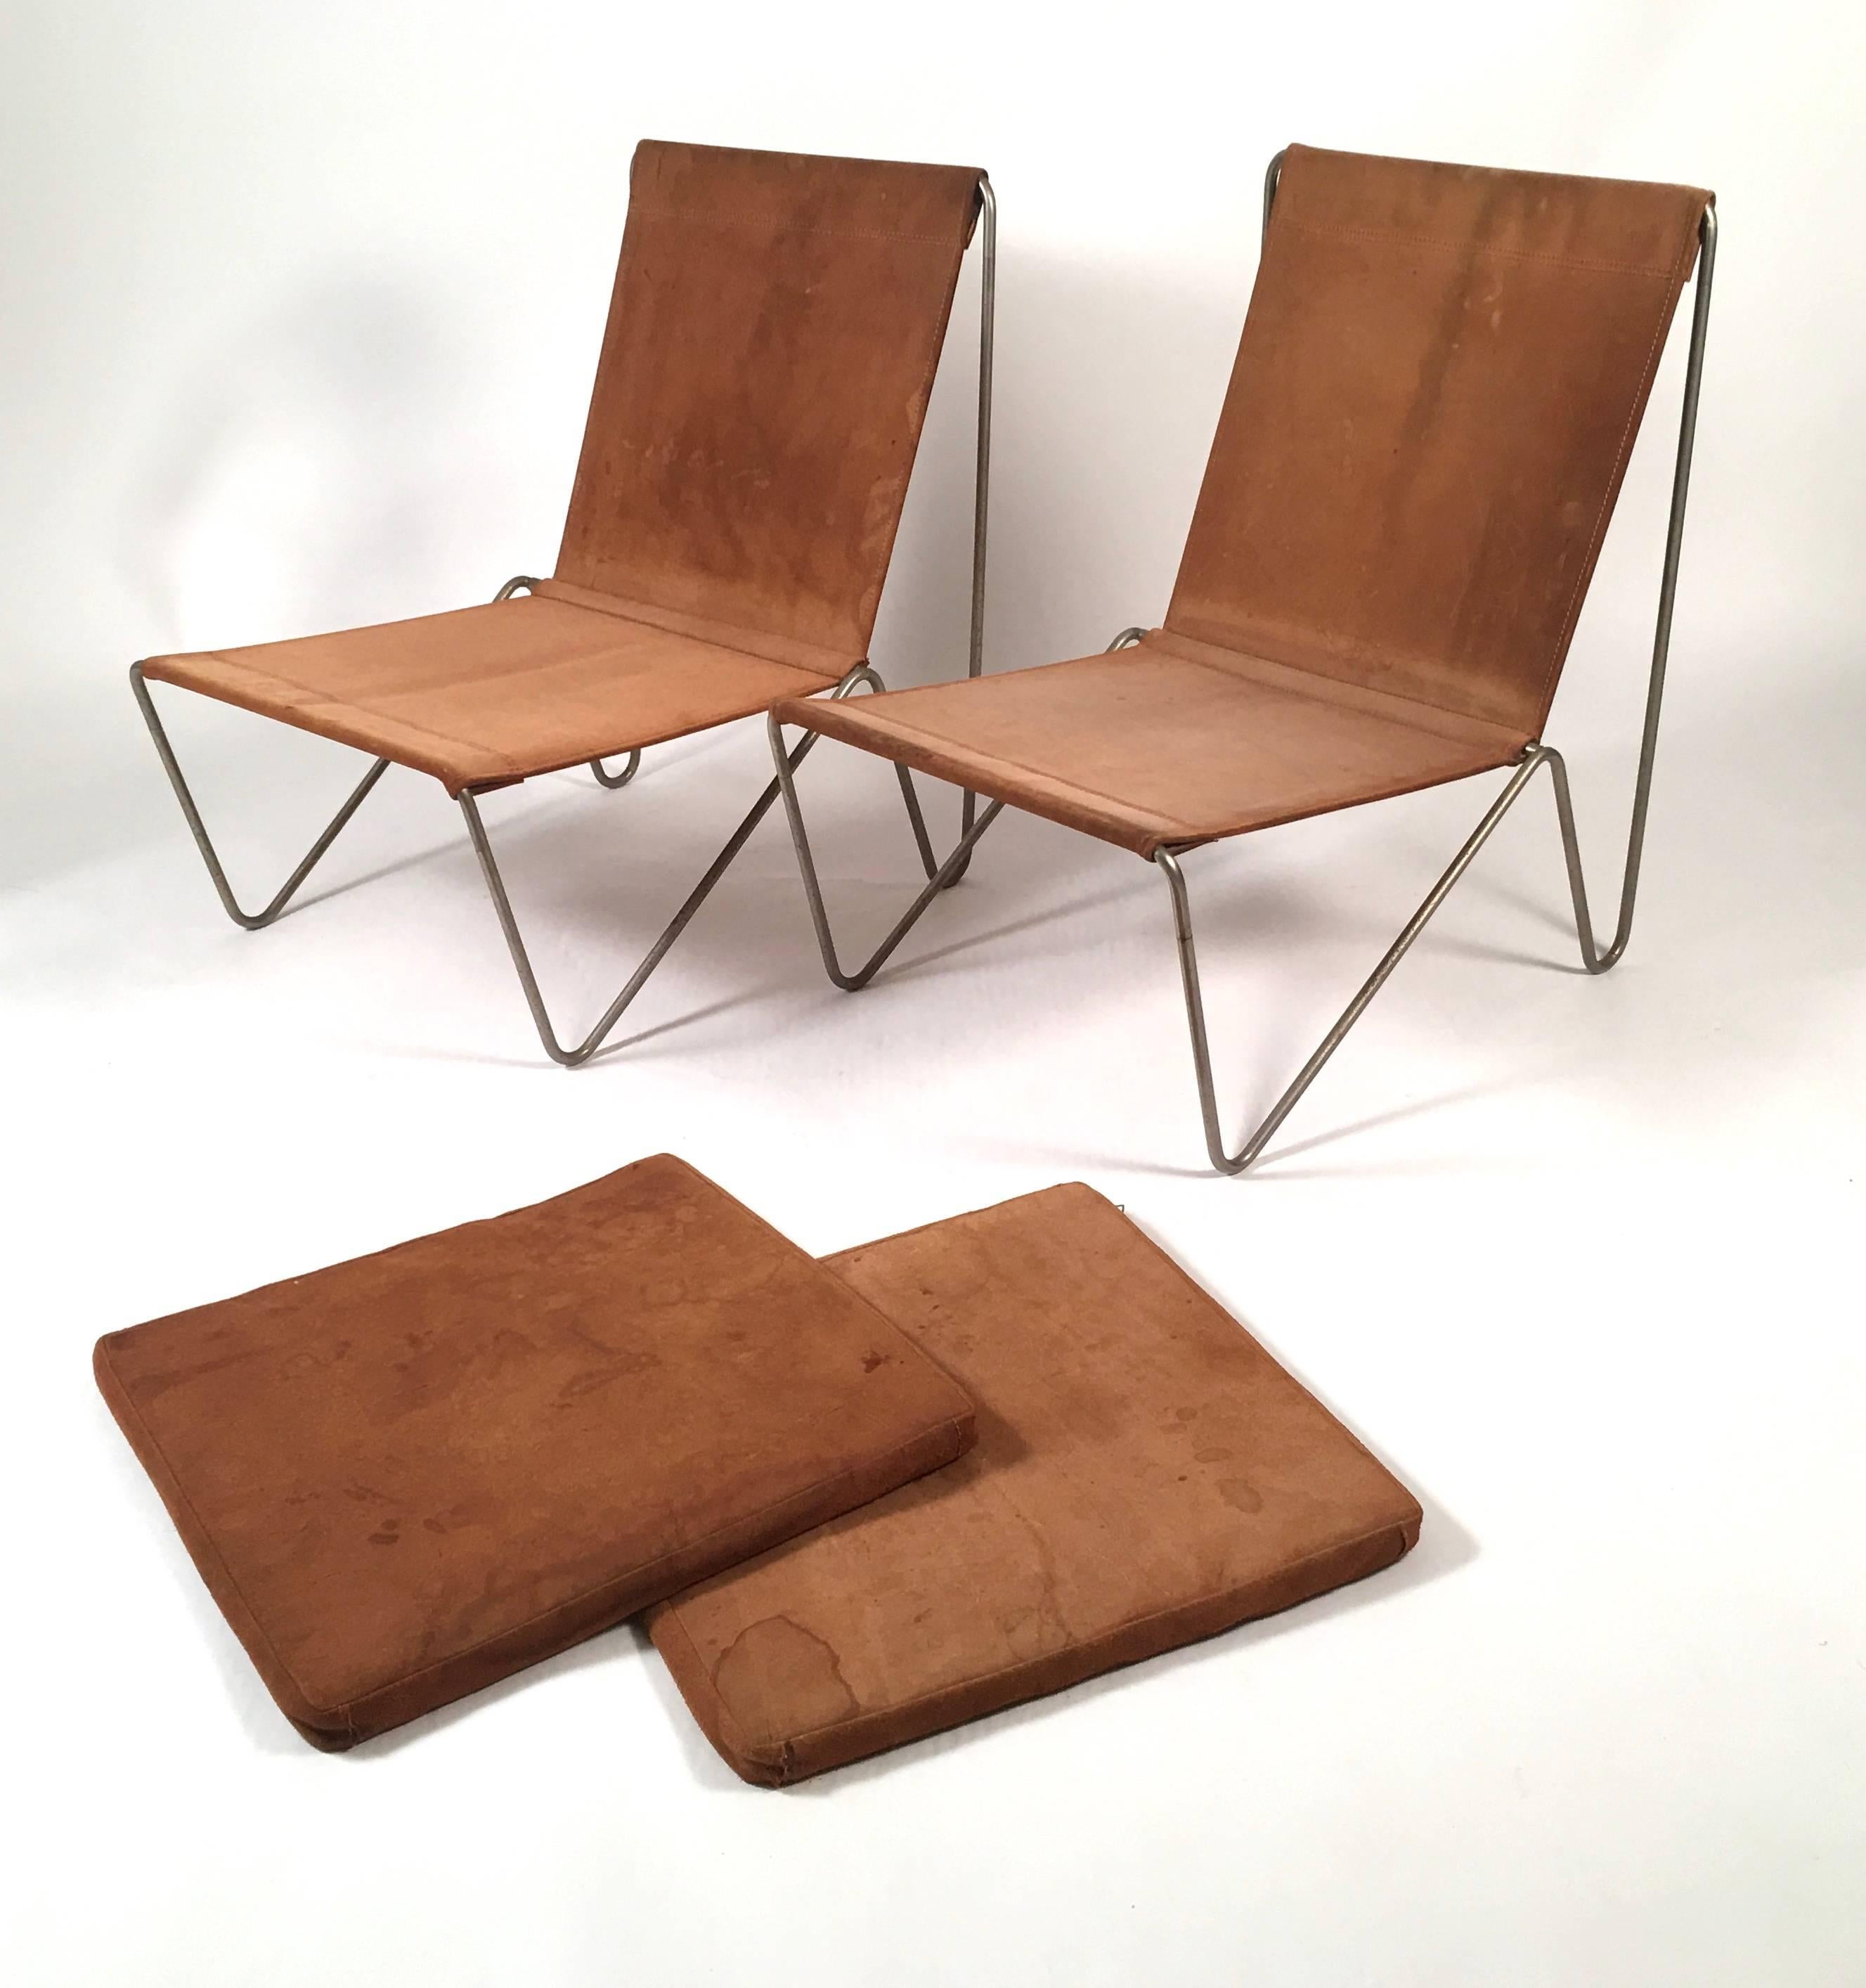 Steel Verner Panton Bachelor Chairs and Table